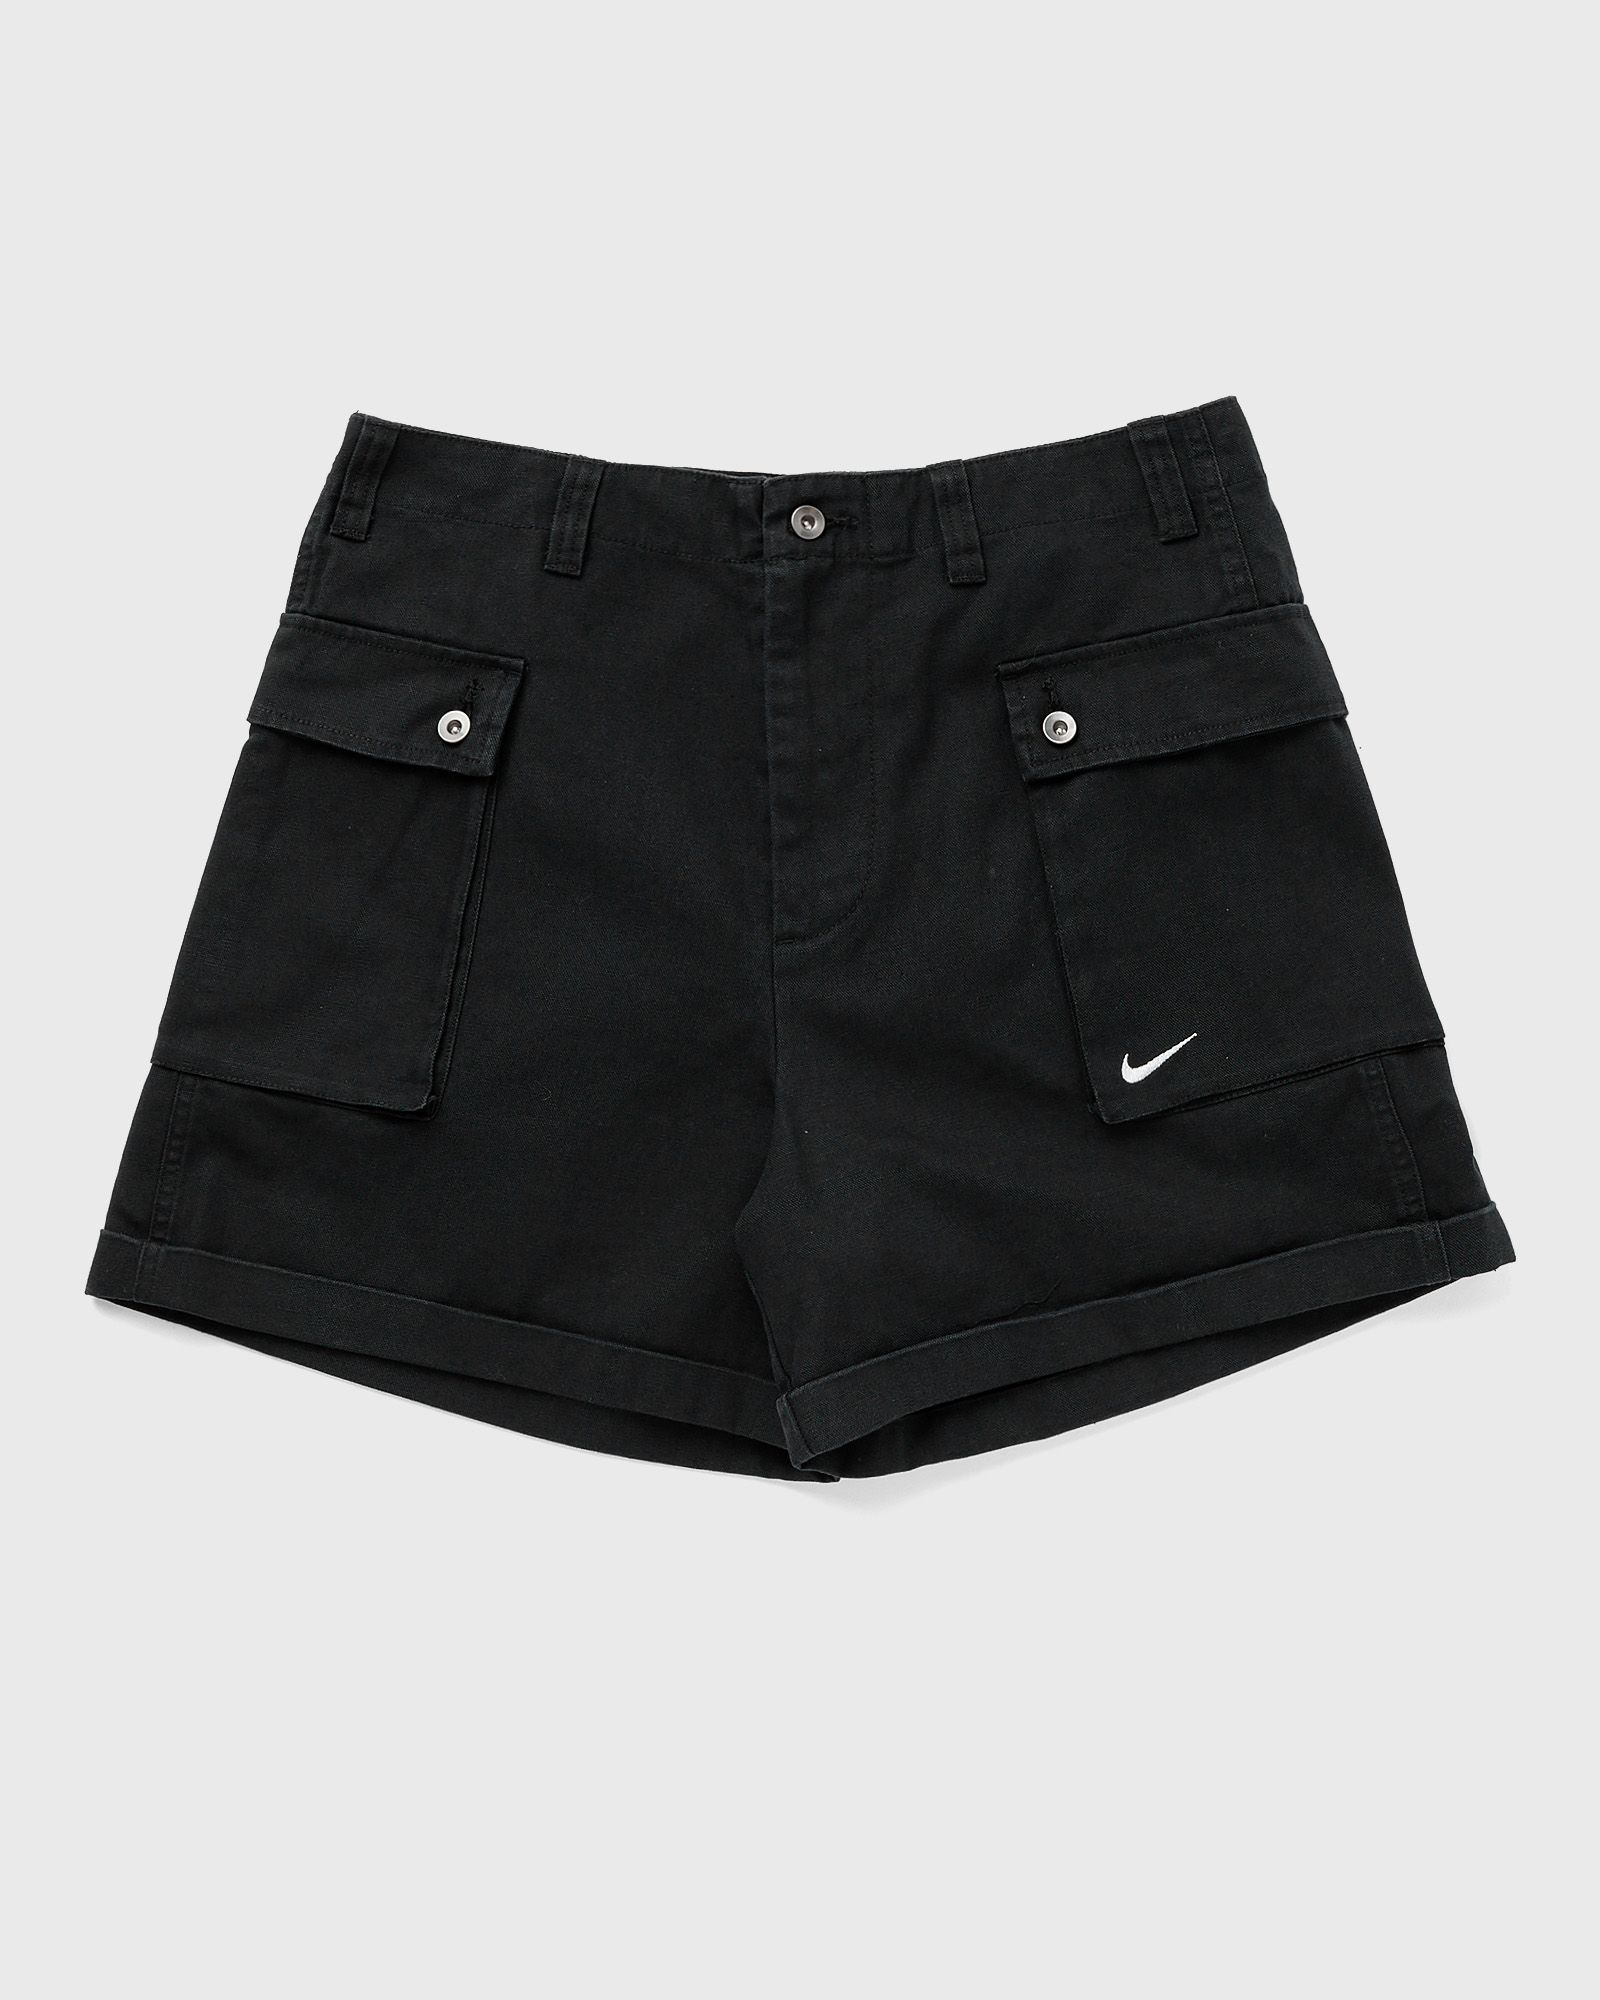 Nike - woven p44 cargo shorts men cargo shorts black in größe:3xl